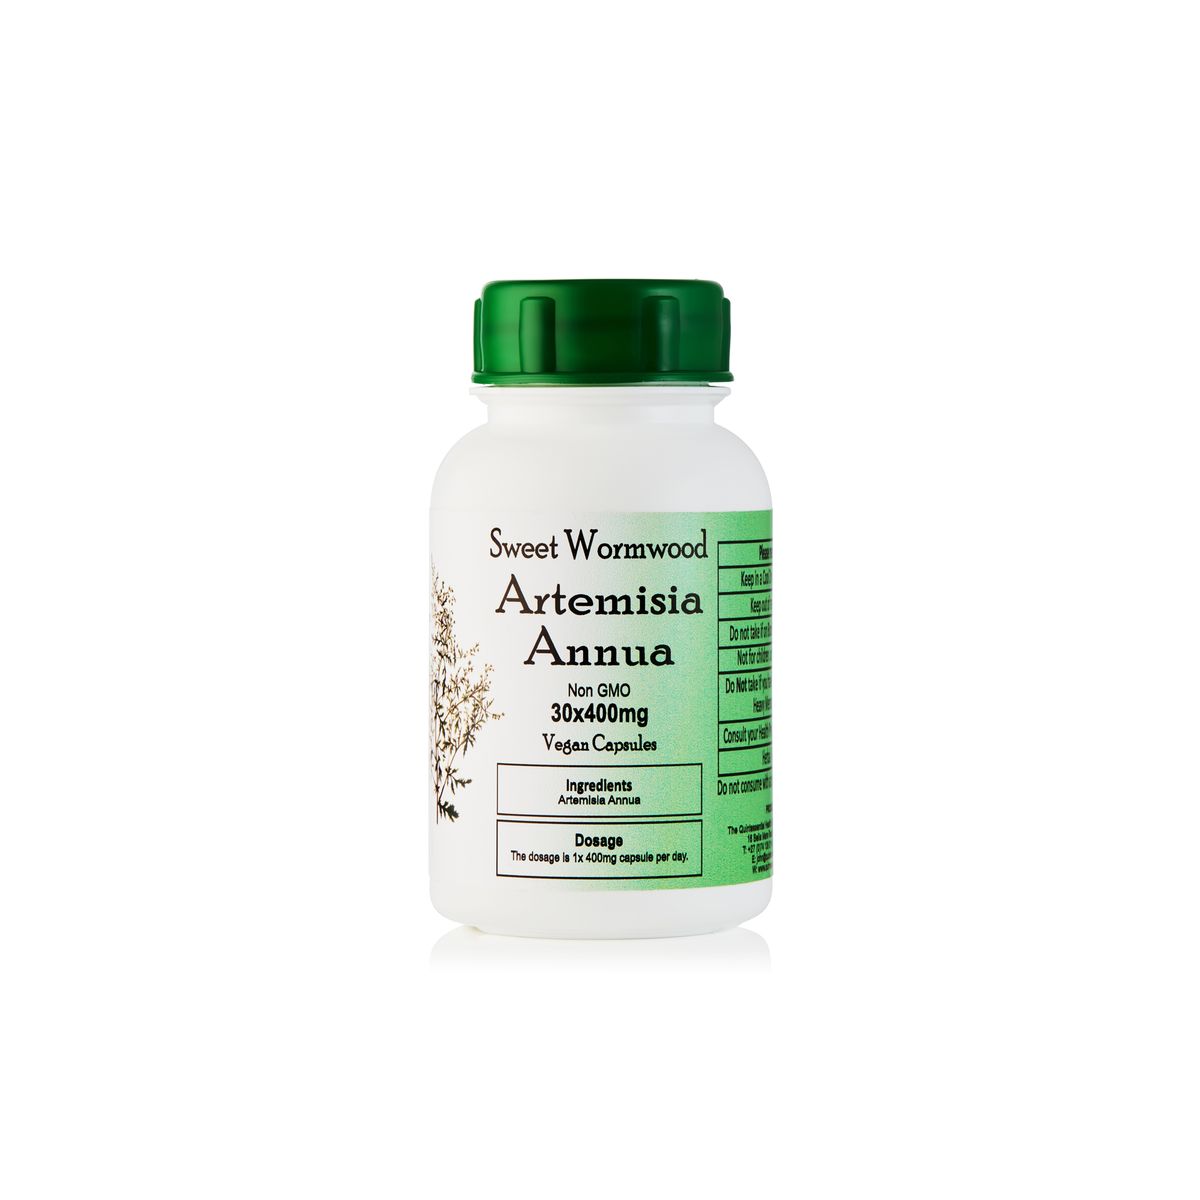 Artemisia Annua Sweet Wormwood Capsule Extract Supplements 400 mg